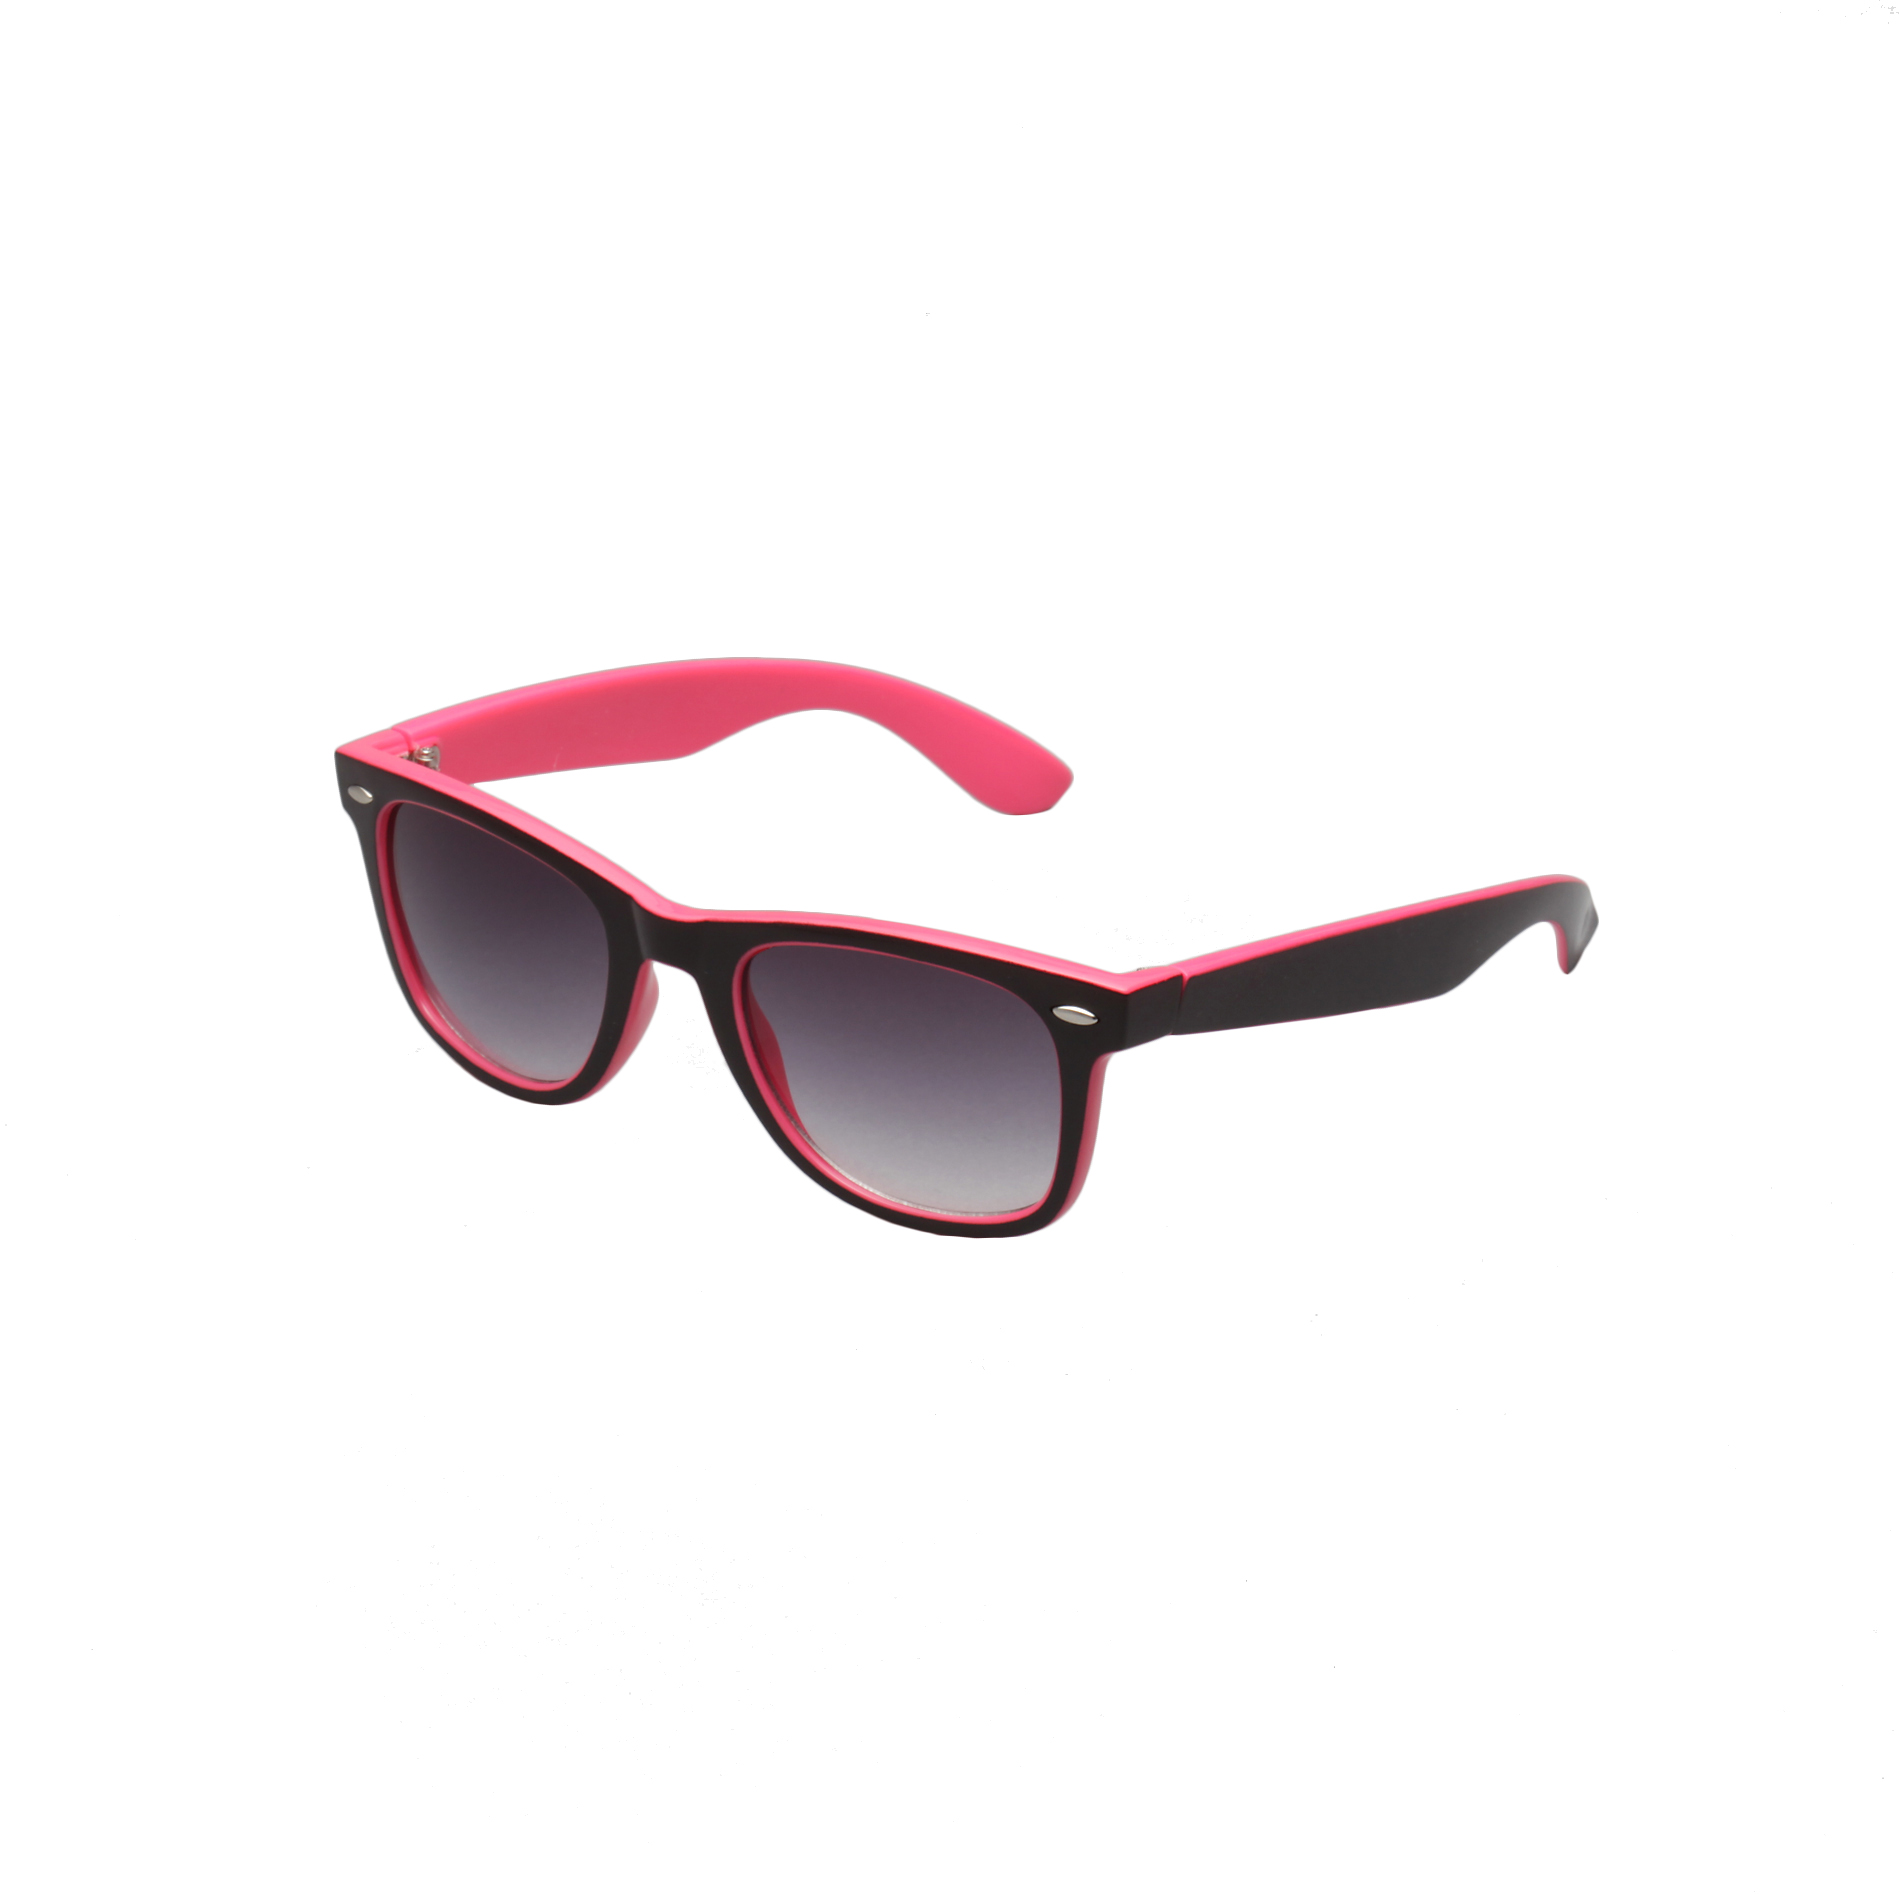 Joe Boxer Women's Wayfarer Sunglasses